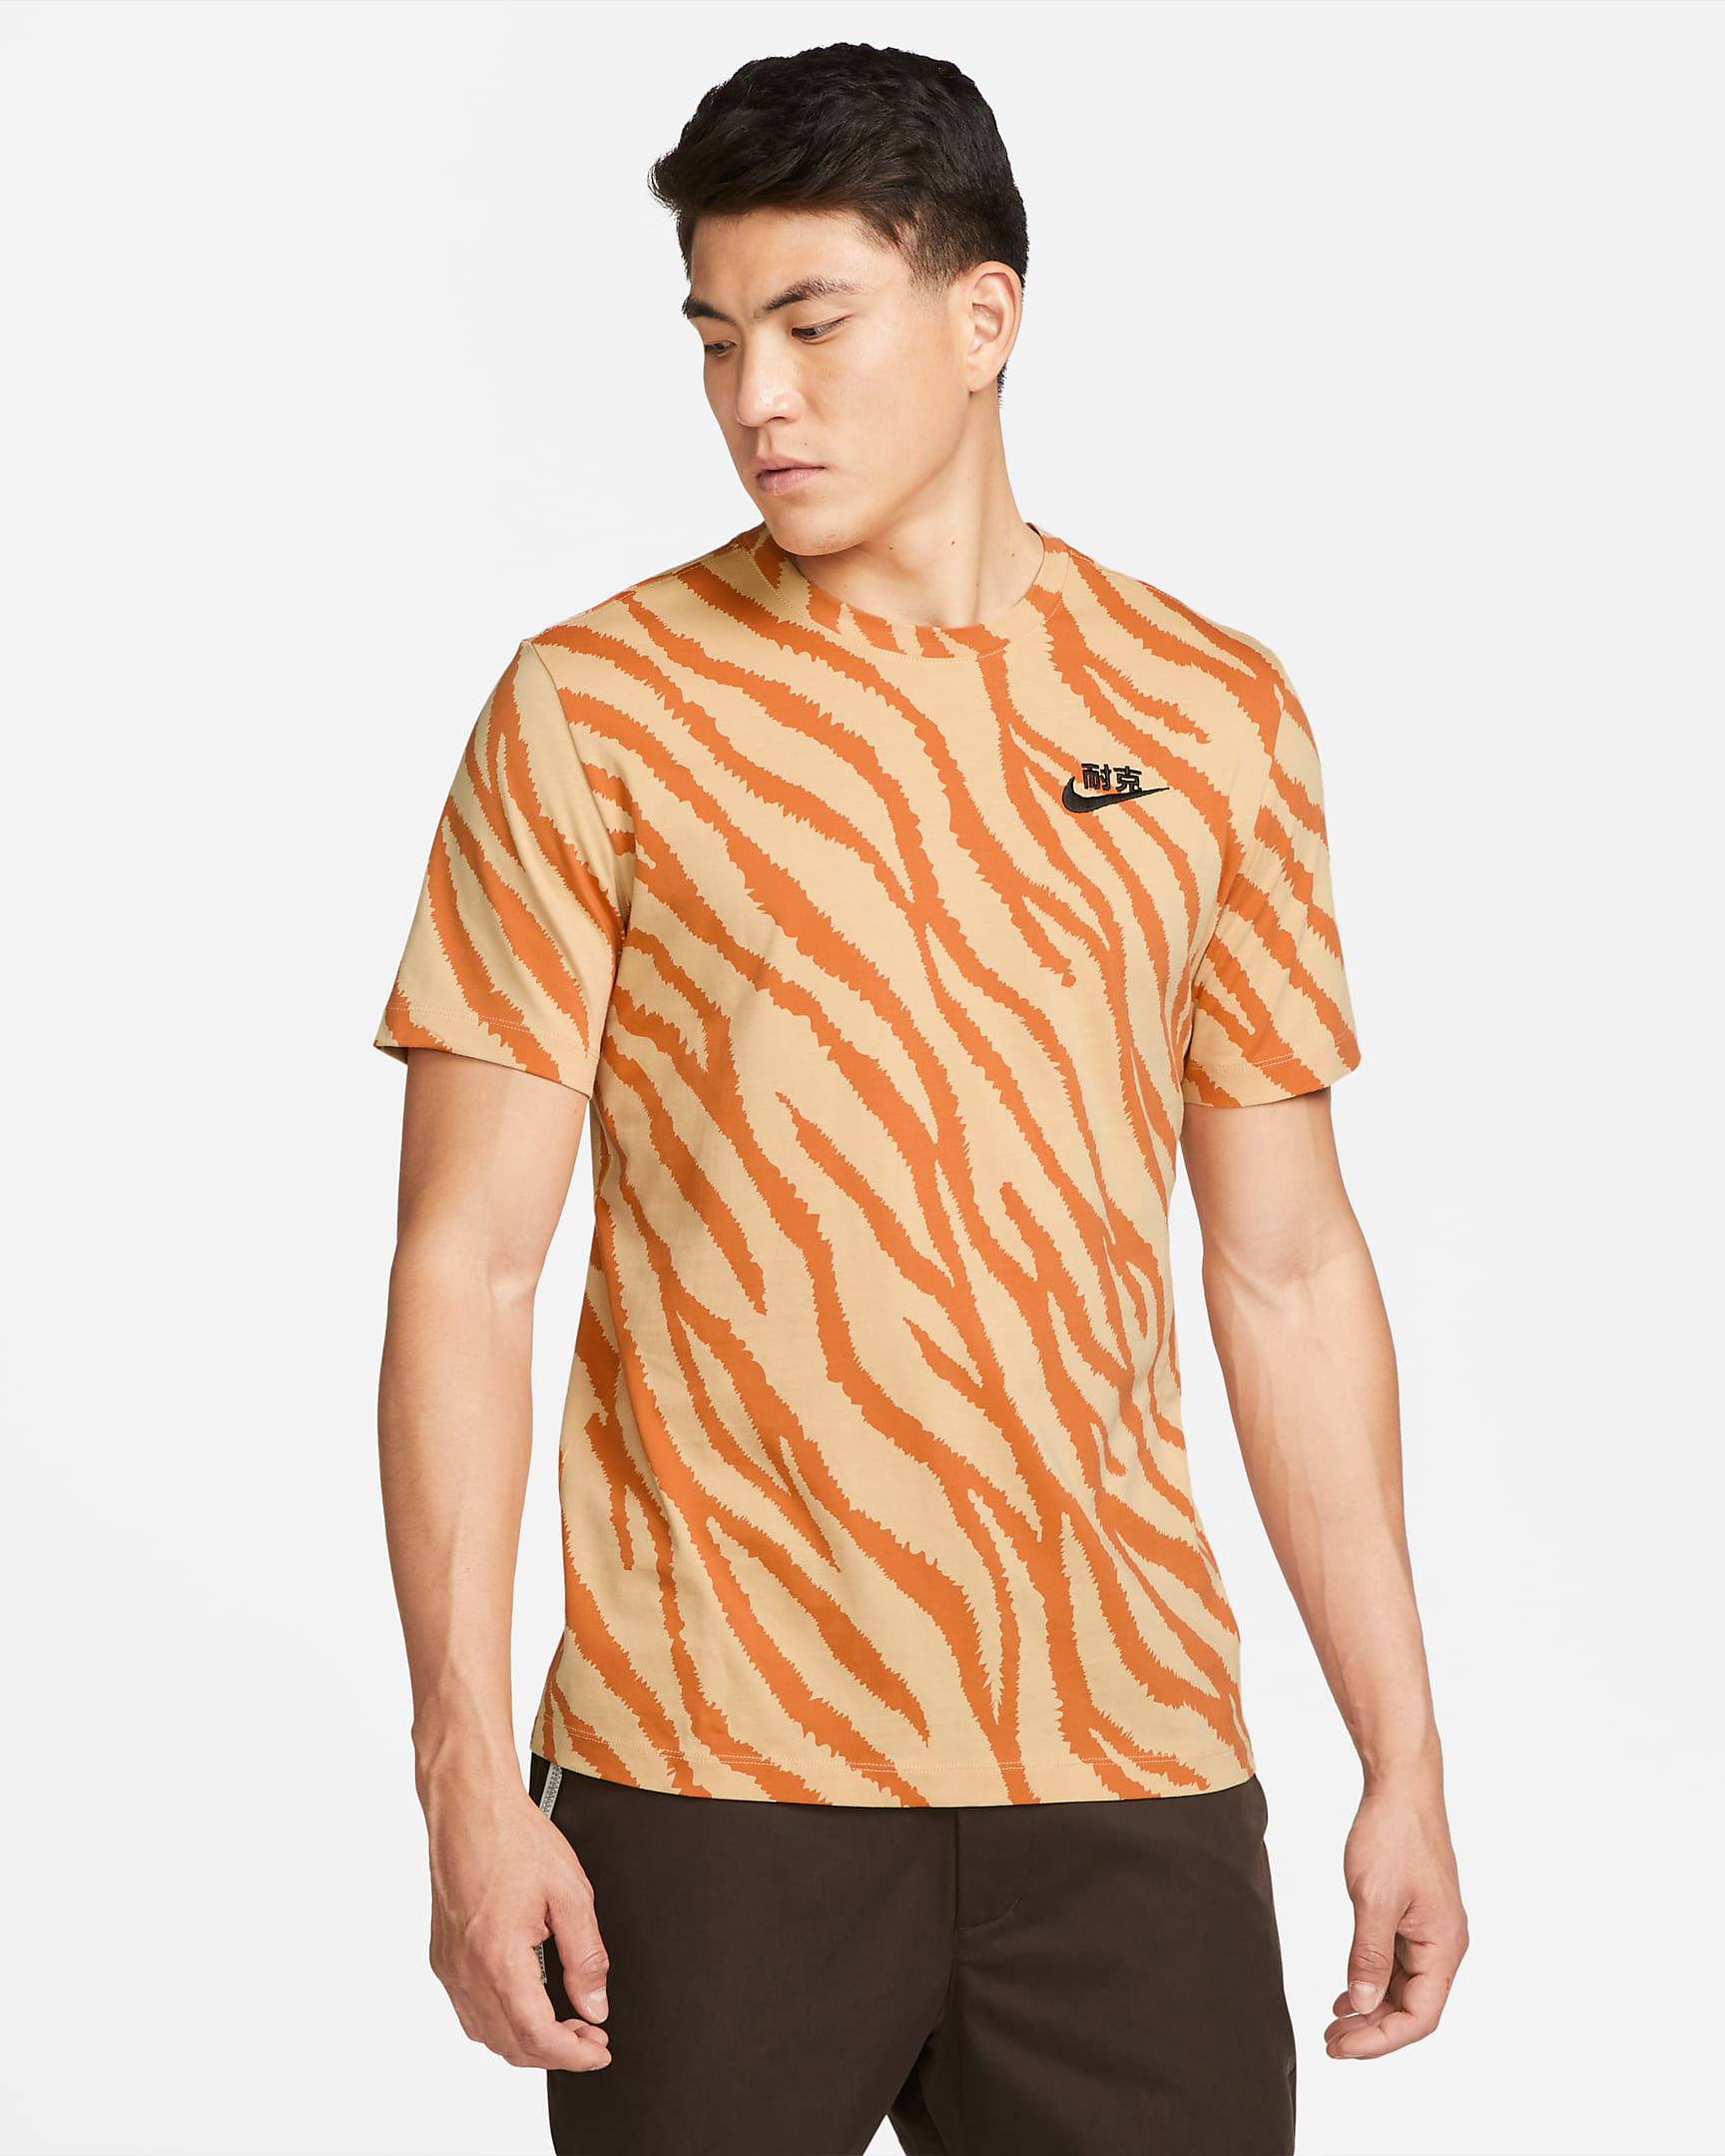 nike-sportswear-tiger-stripes-t-shirt-sesame-1